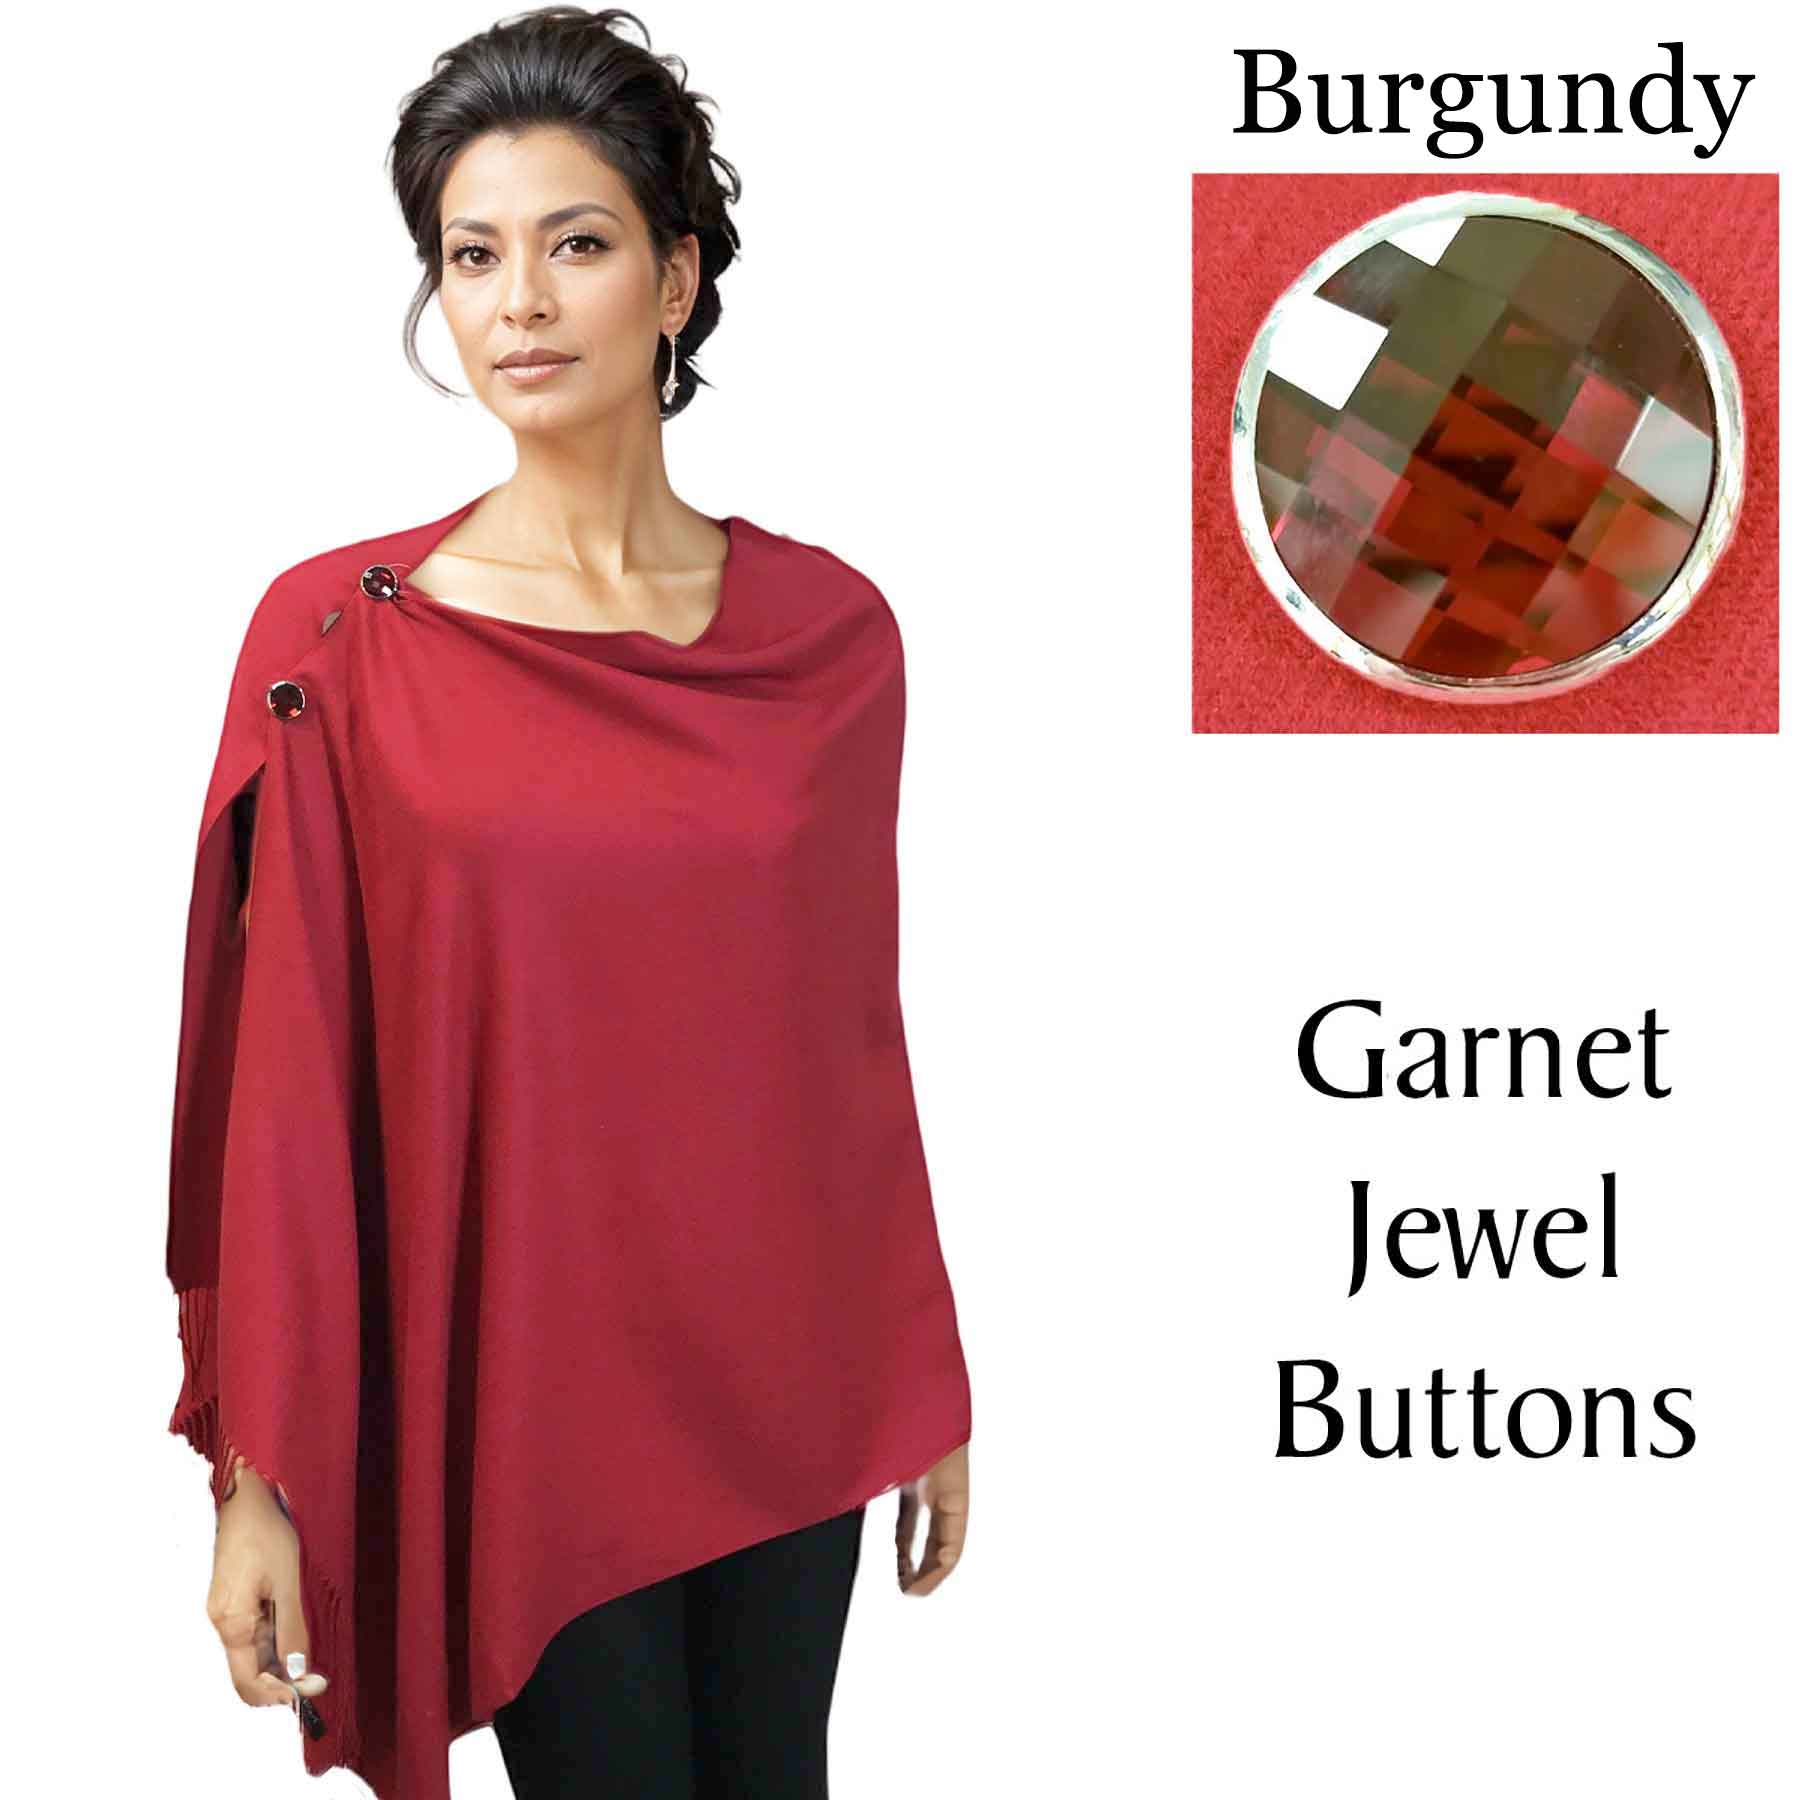 #17 Burgundy with Garnet Jewel Buttons